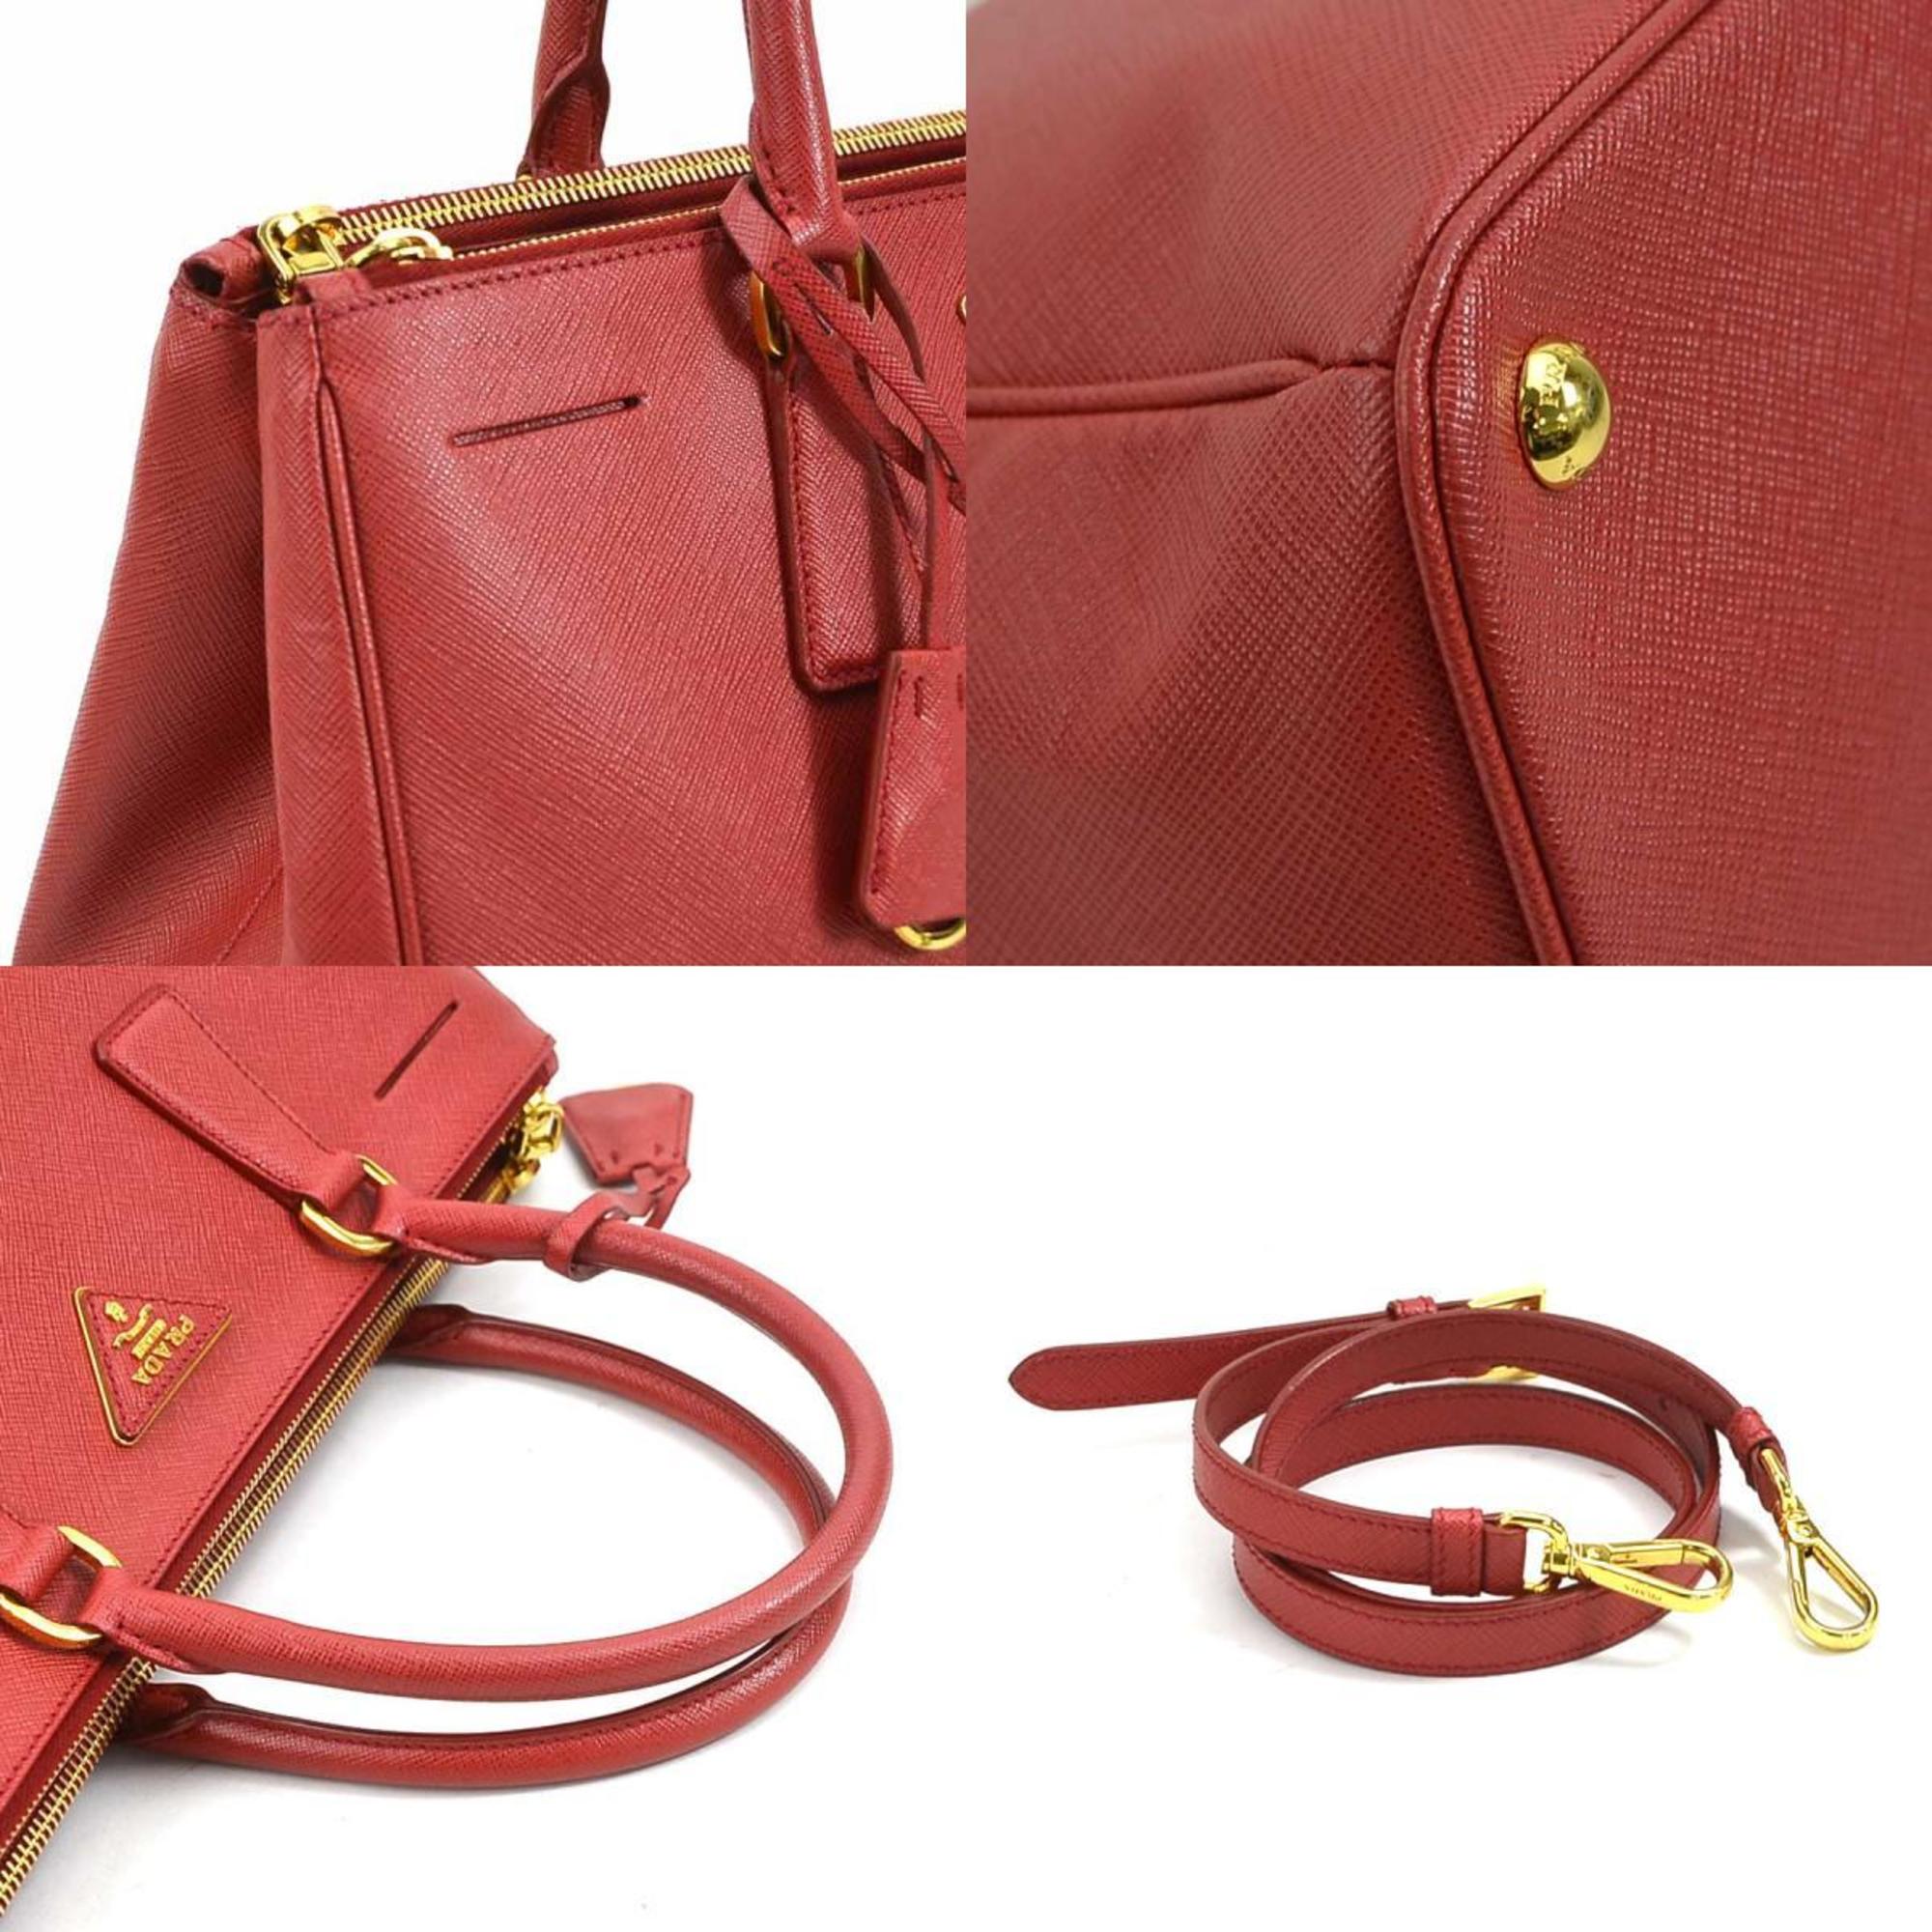 PRADA handbag shoulder bag leather red ladies 99923g